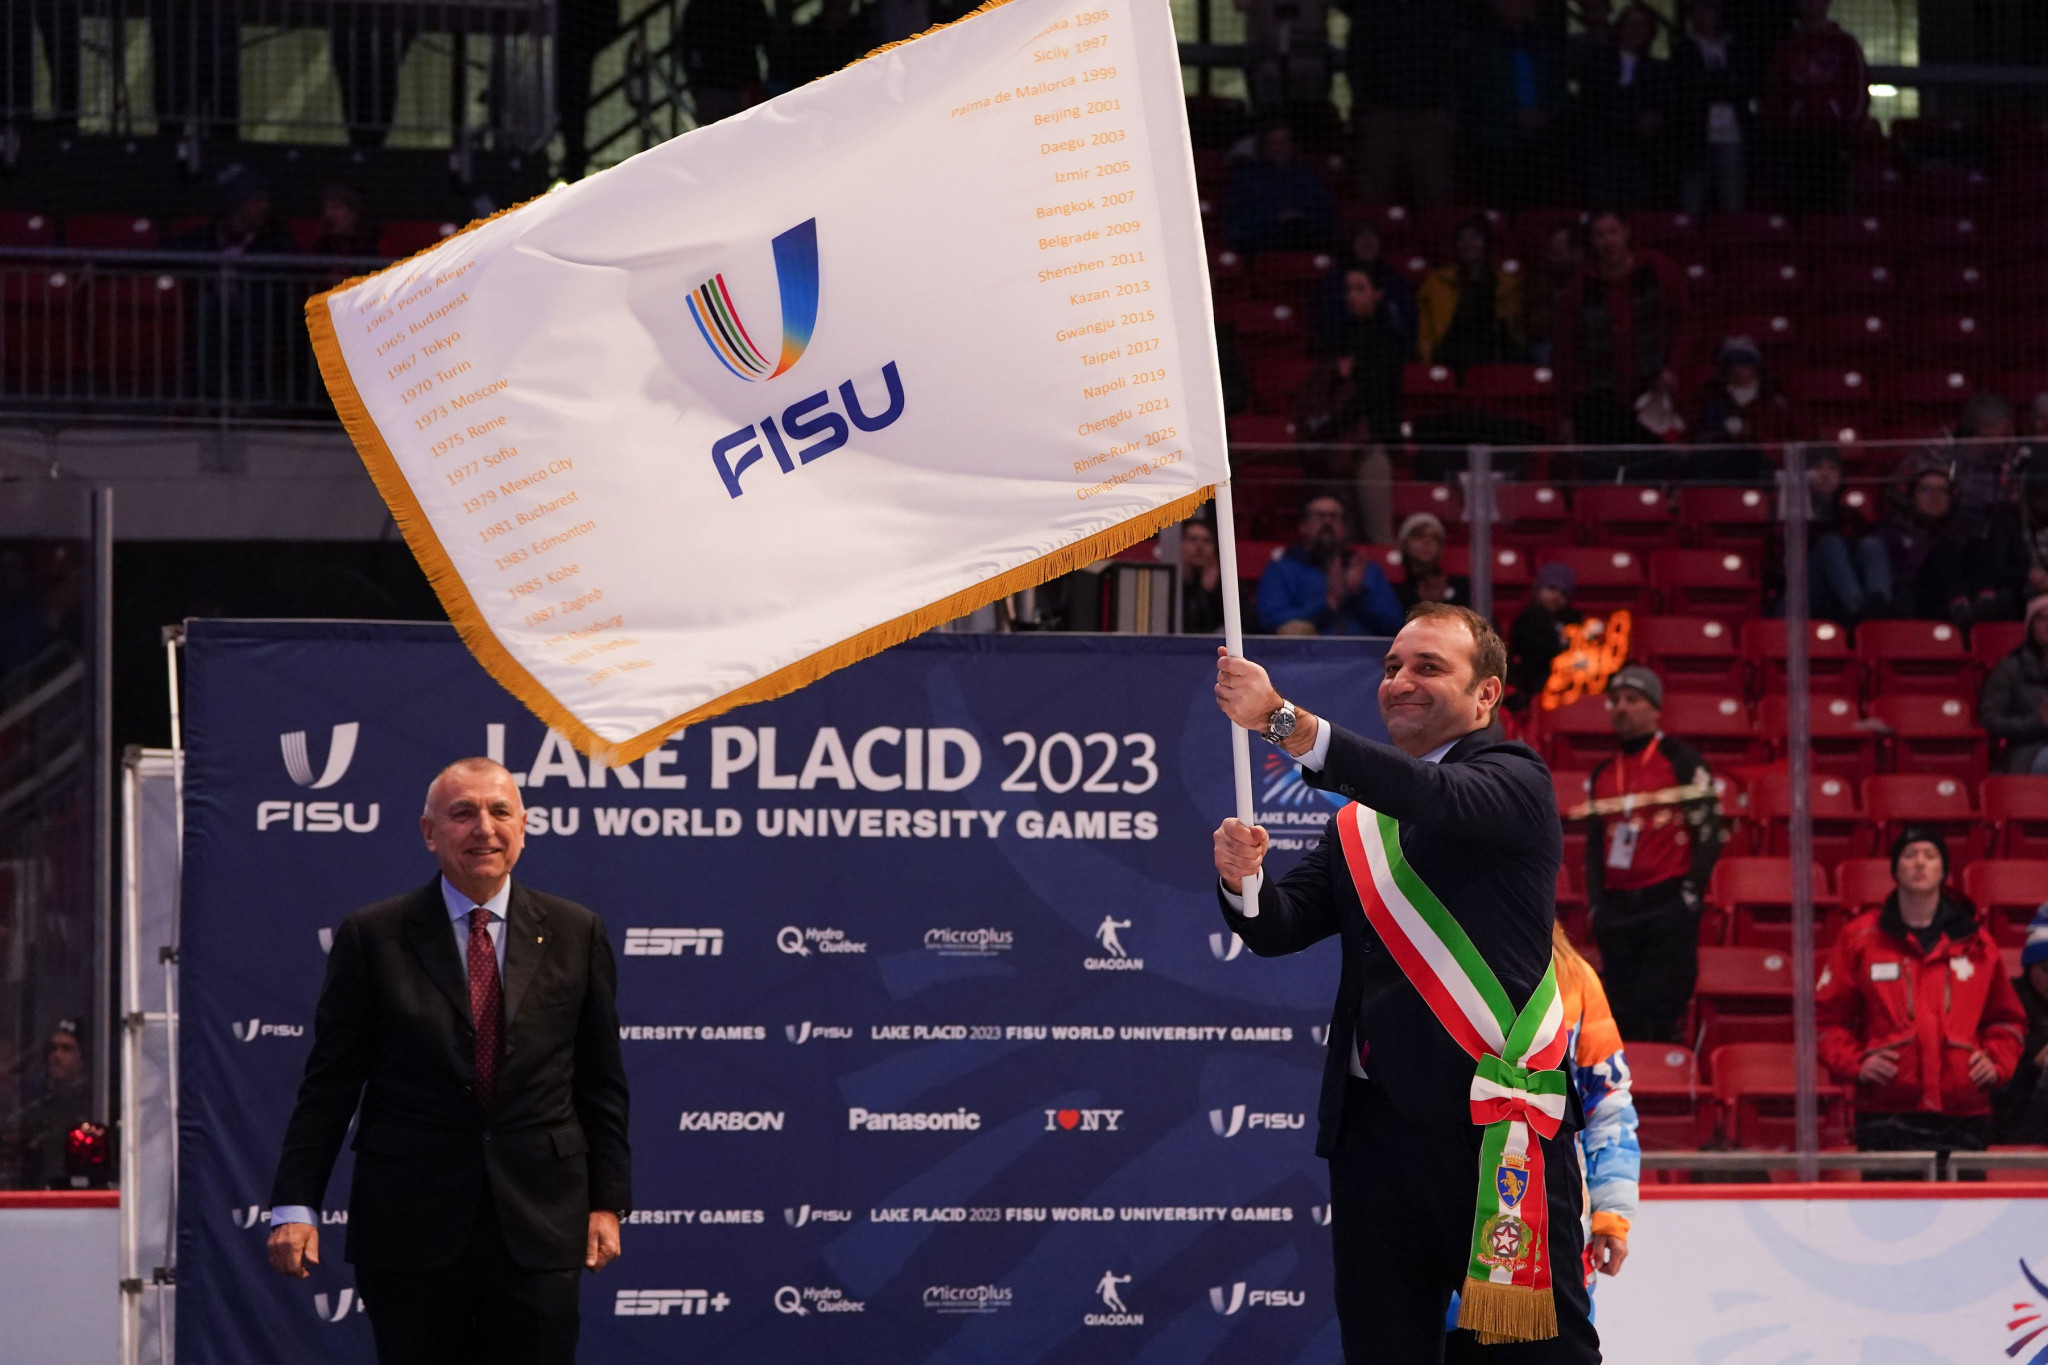 Turin Mayor Stefano Lo Russo receives the FISU flag during the Handover Ceremony at Lake Placid 2023 ©FISU